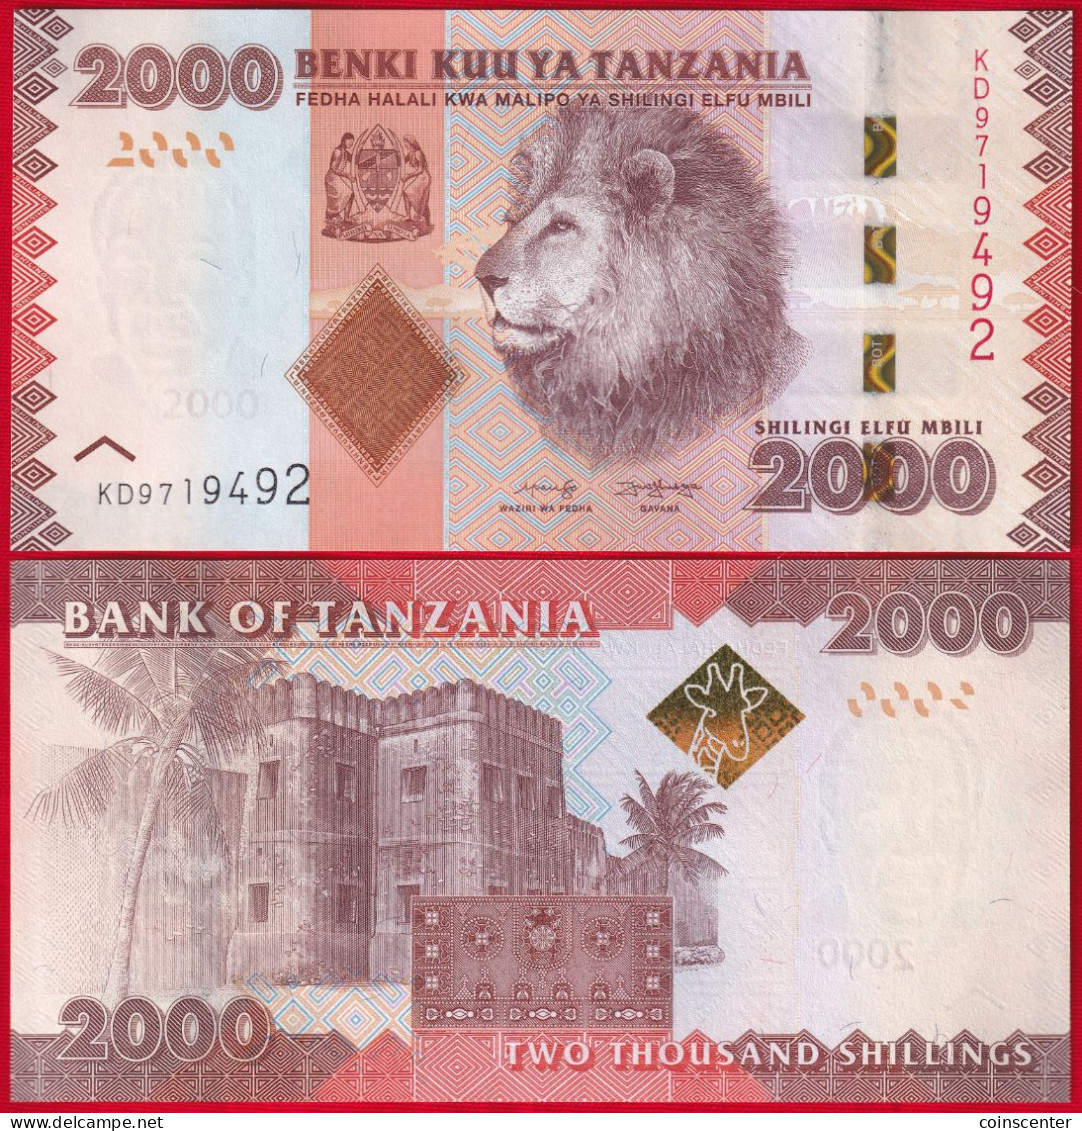 Tanzania 2000 Shillings 2020 P-42 UNC - Tanzania